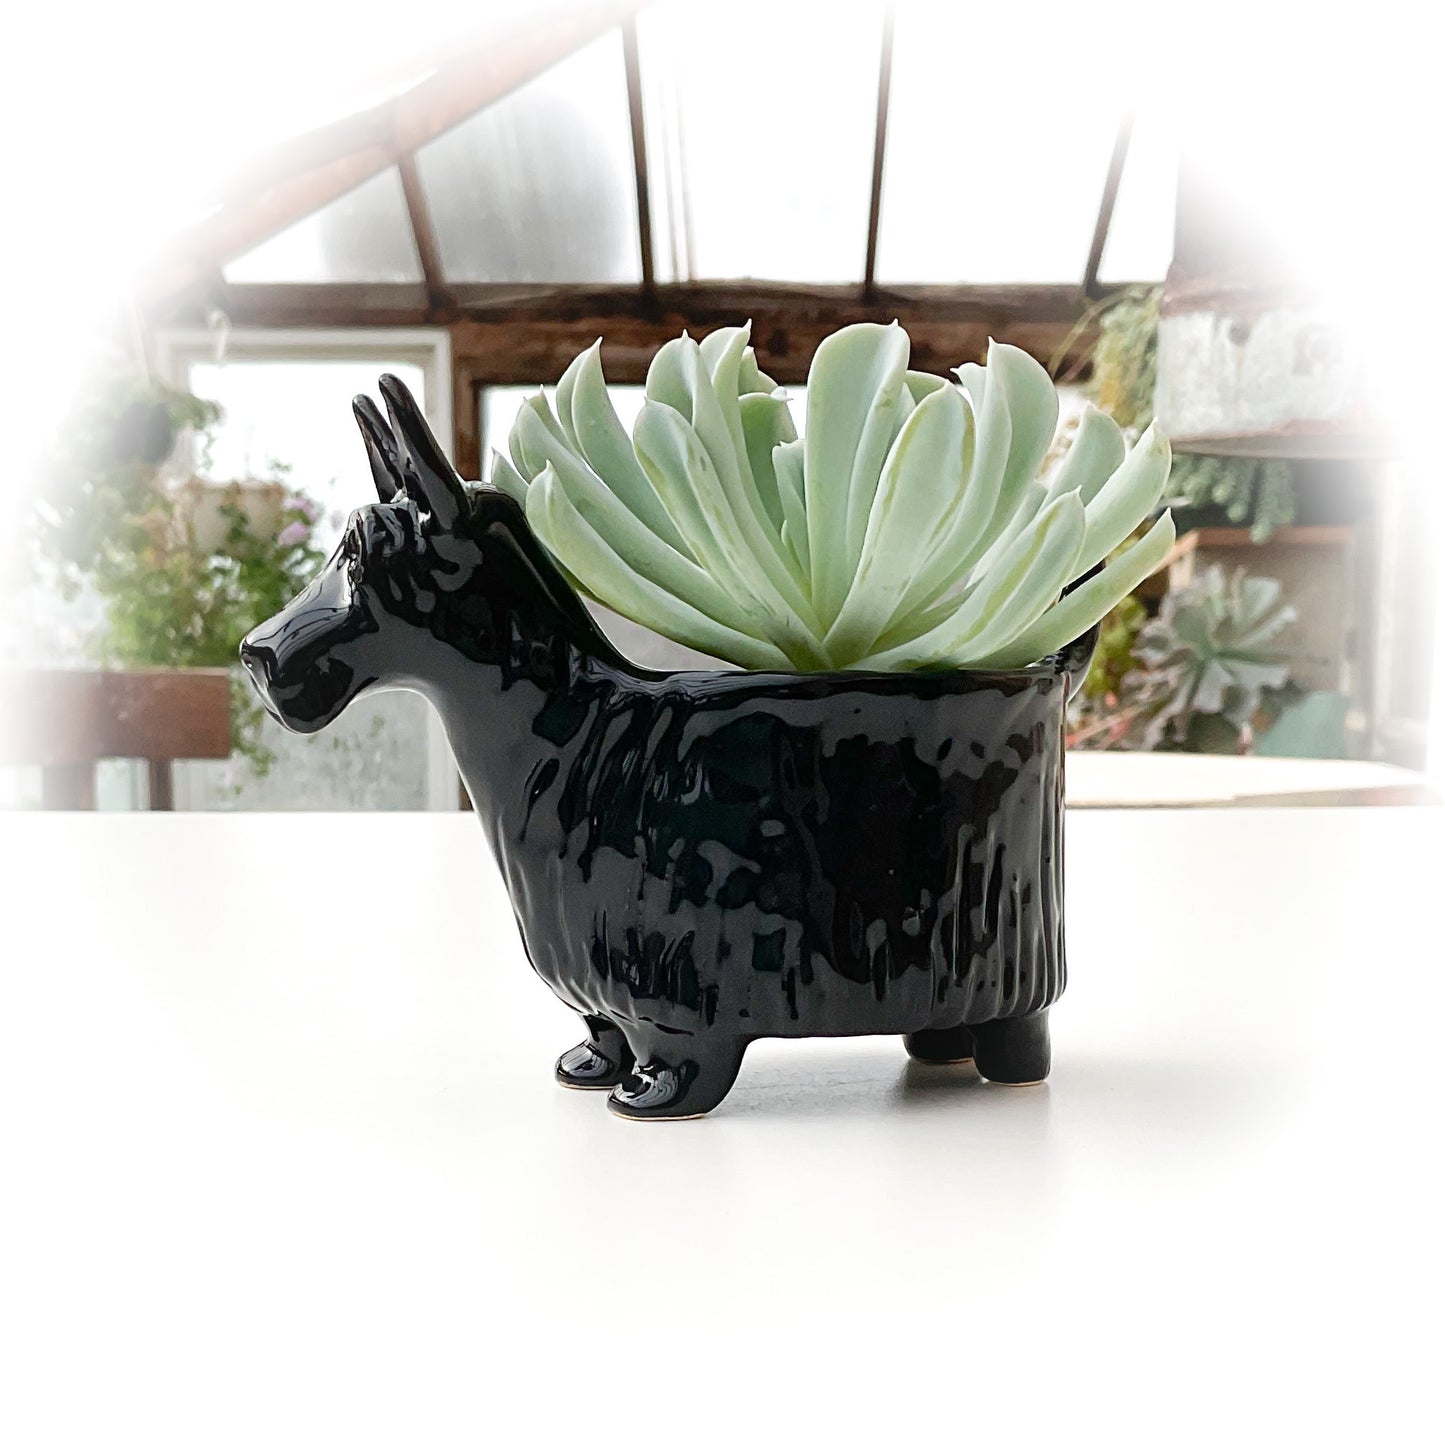 Scottish Terrier Dog Planter - Ceramic Dog Plant Pot